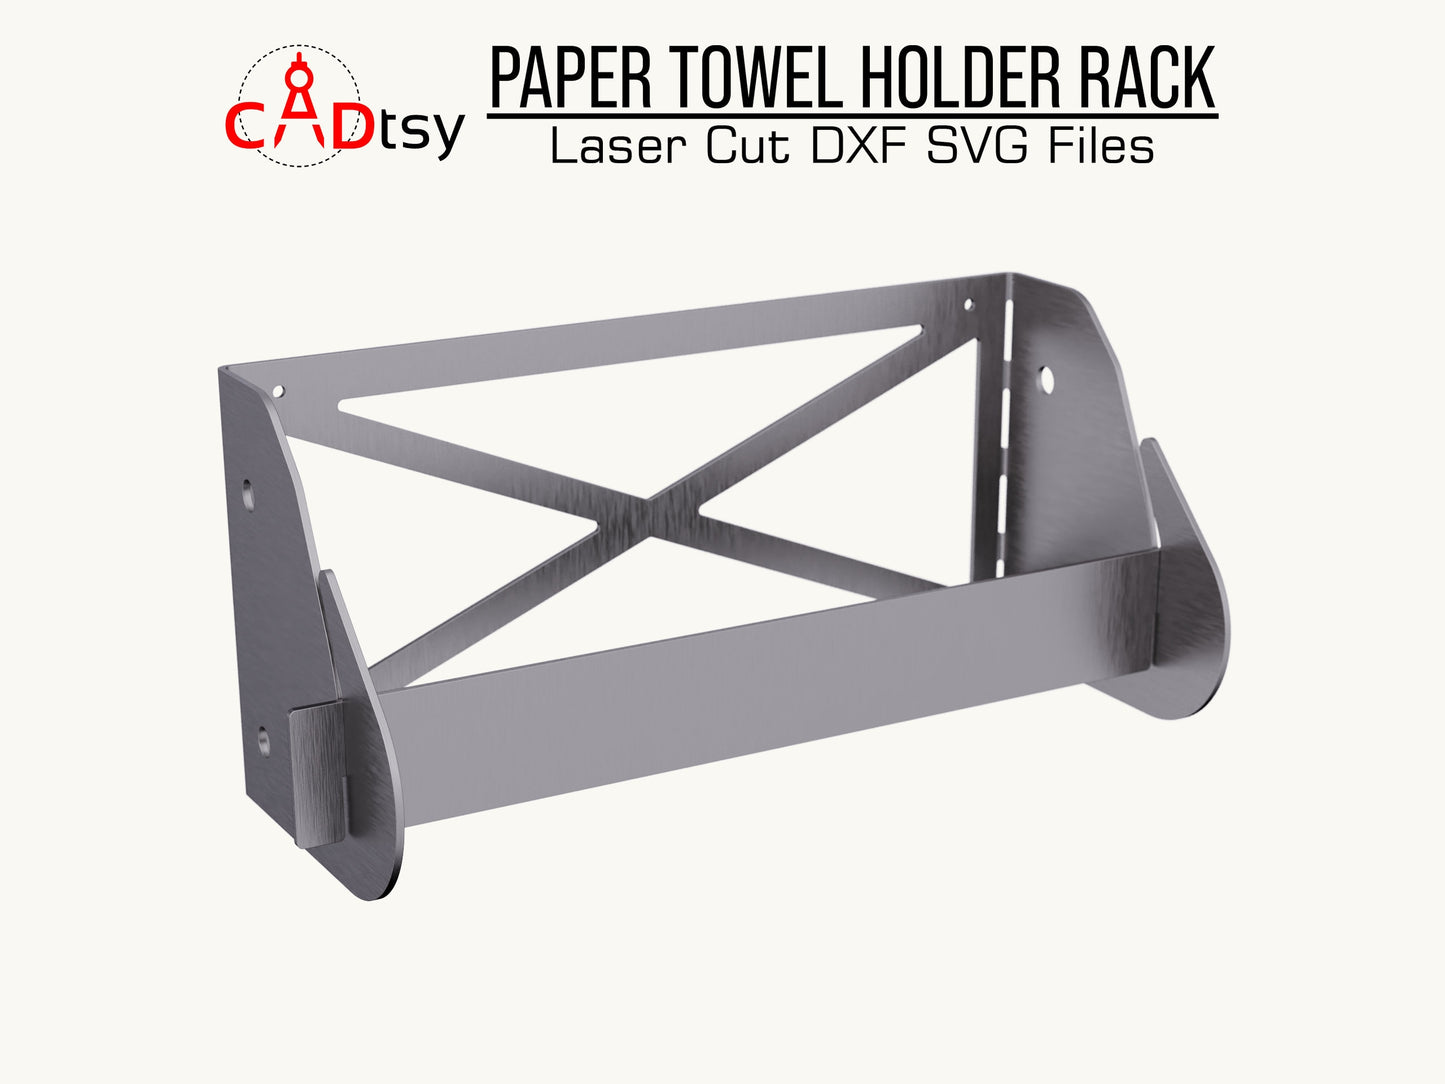 Laser Cut Paper Towel Holder Rack, Wall-Mounted DXF SVG Files for CNC Plasma Cutting, Modern Industrial Kitchen Accessory Design, Workshop and Garage Organizer Digital Download